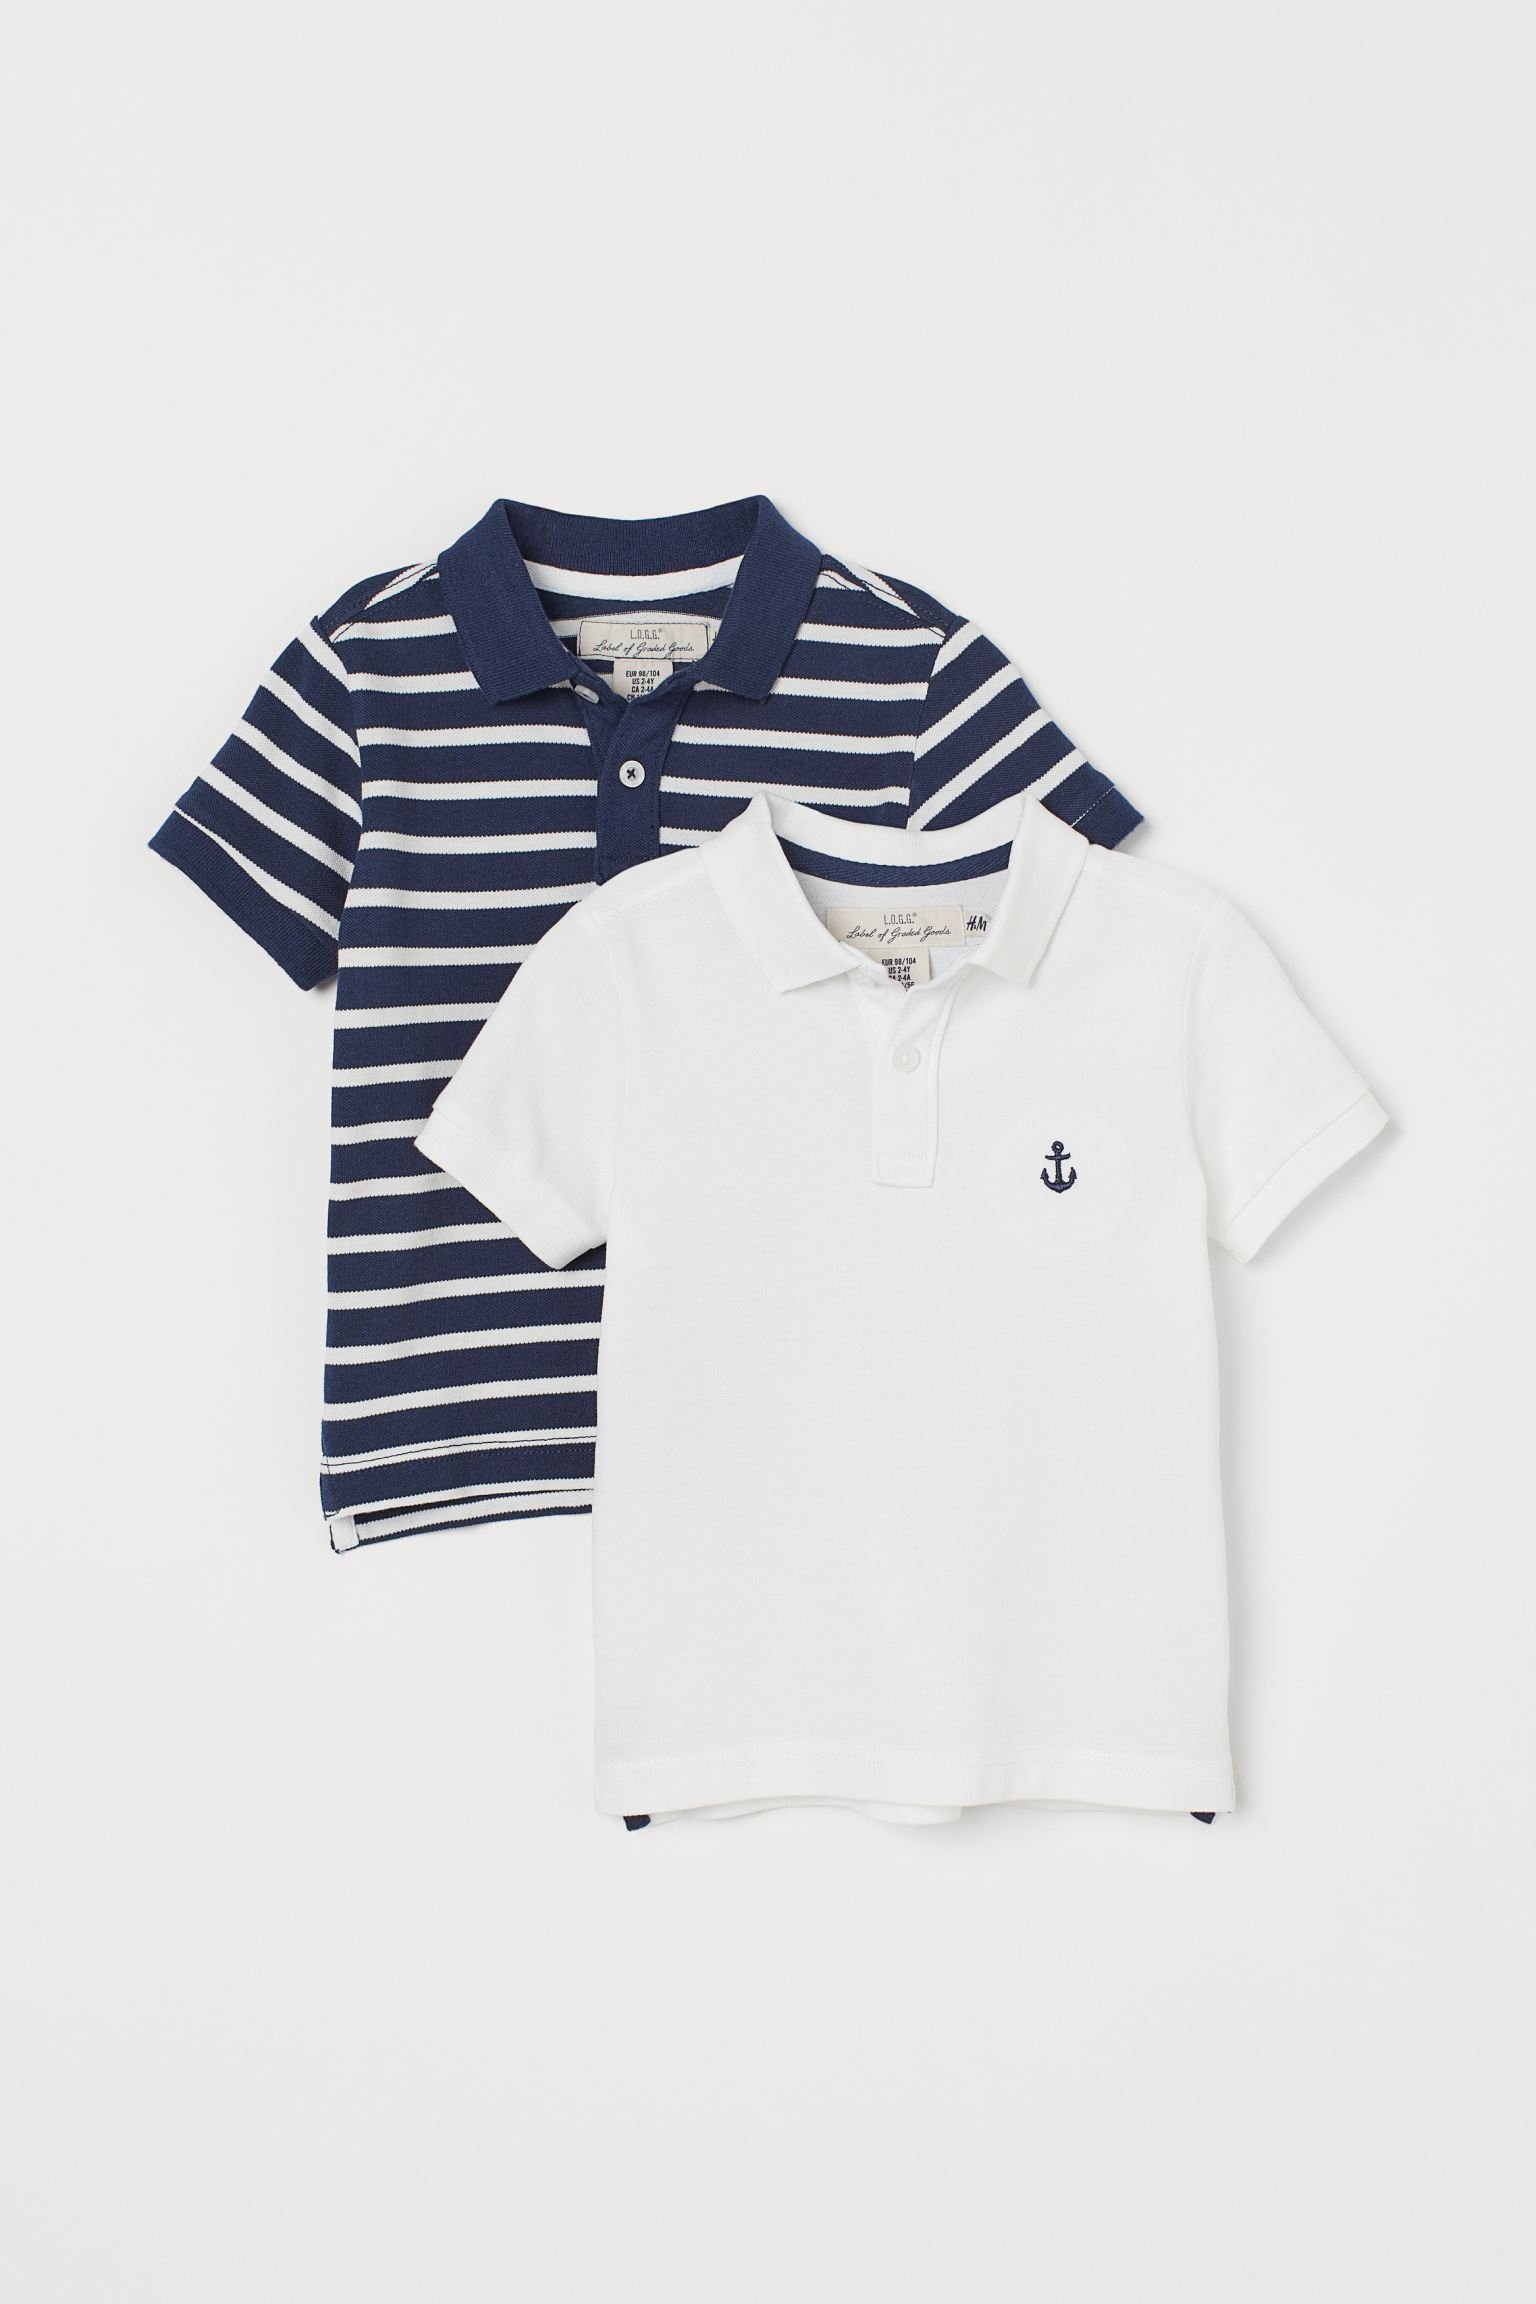 H&M 2-pack Polo Shirts in White Dark Blue Striped.jpg